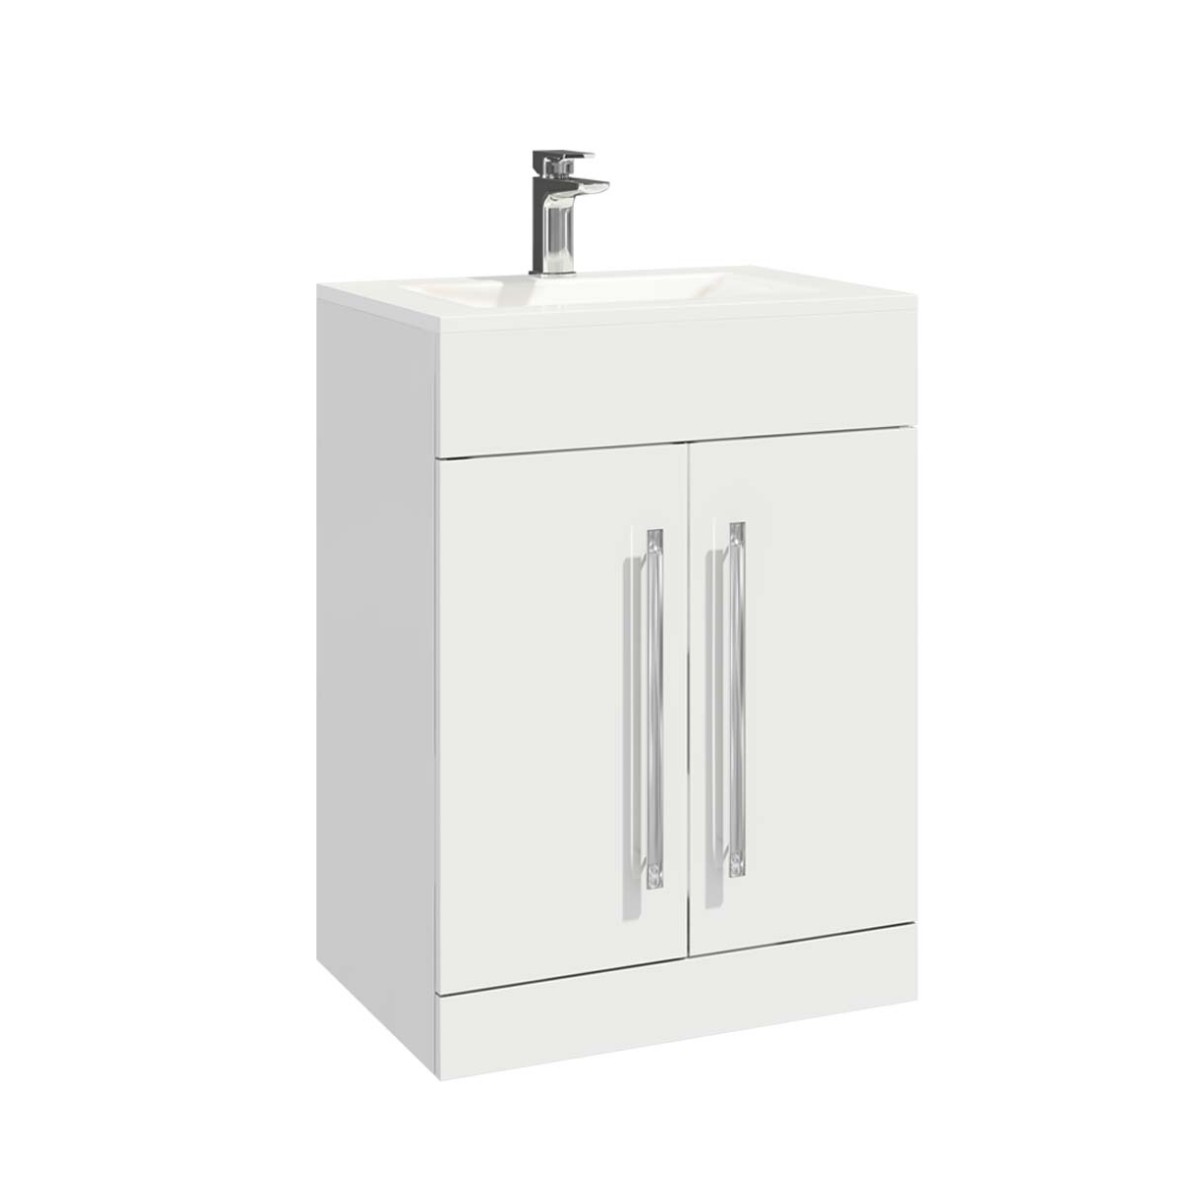 Lili 600 White Bathroom Vanity with Sink